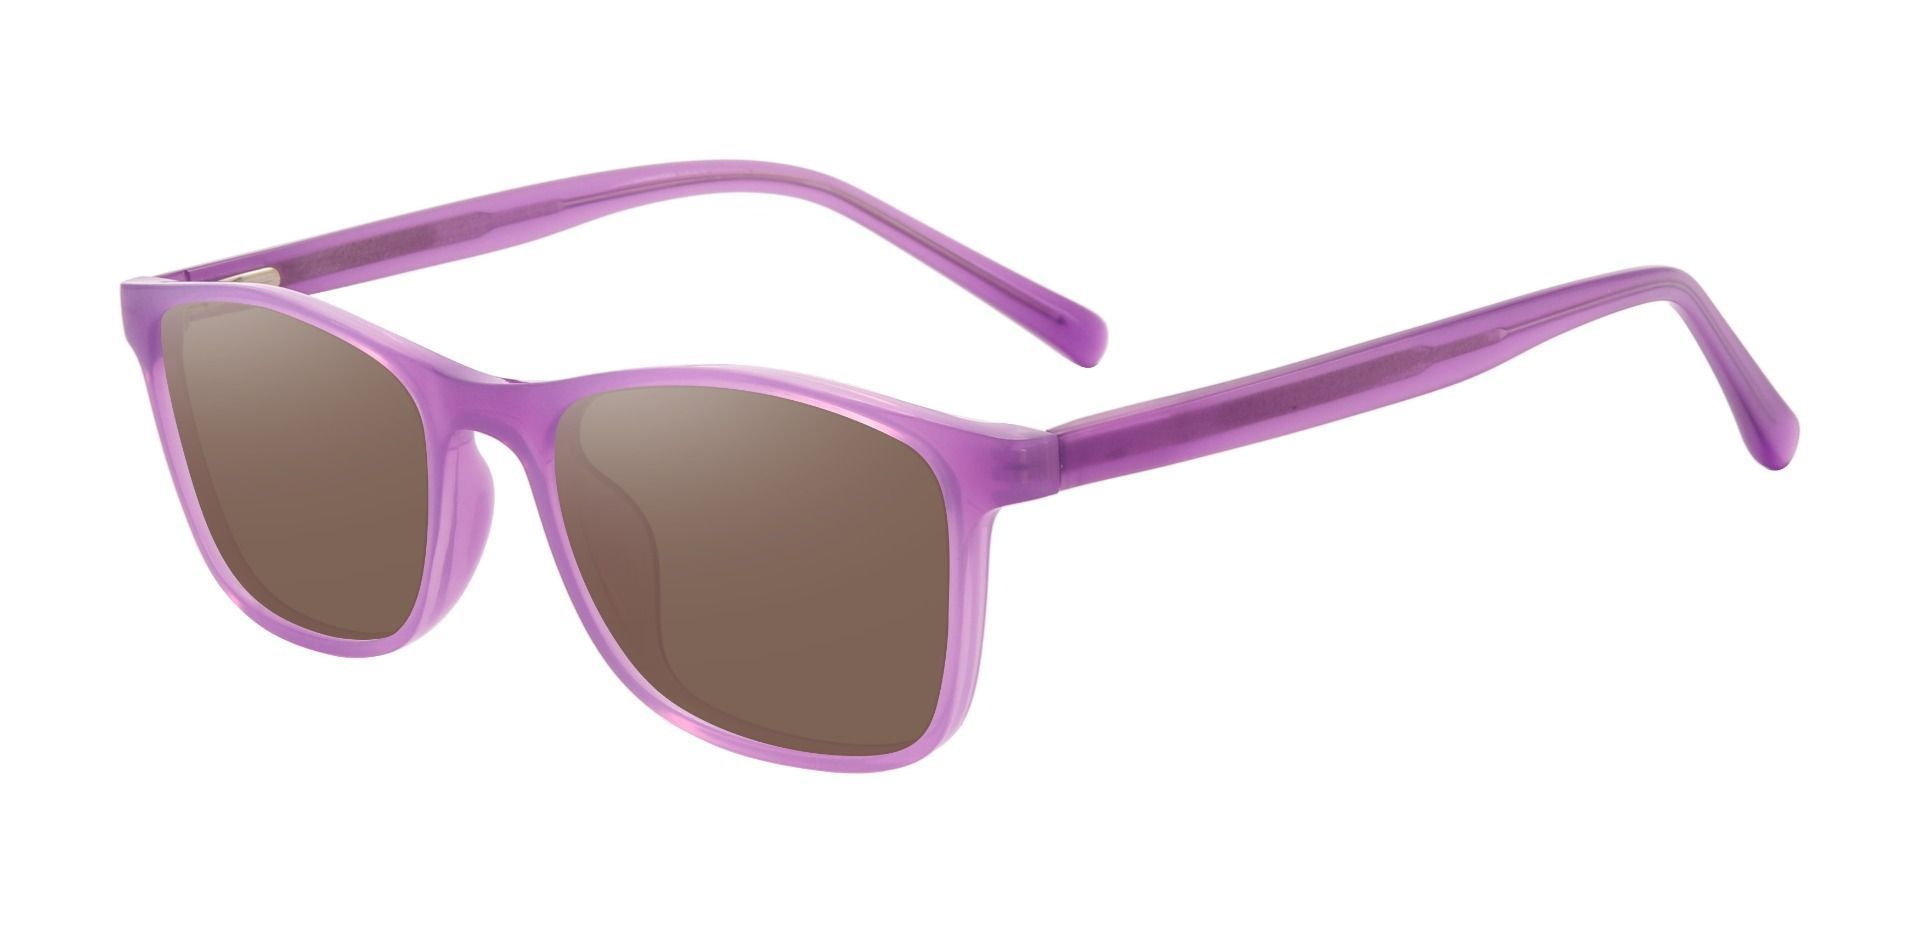 Anton Rectangle Prescription Sunglasses - Purple Frame With Brown Lenses